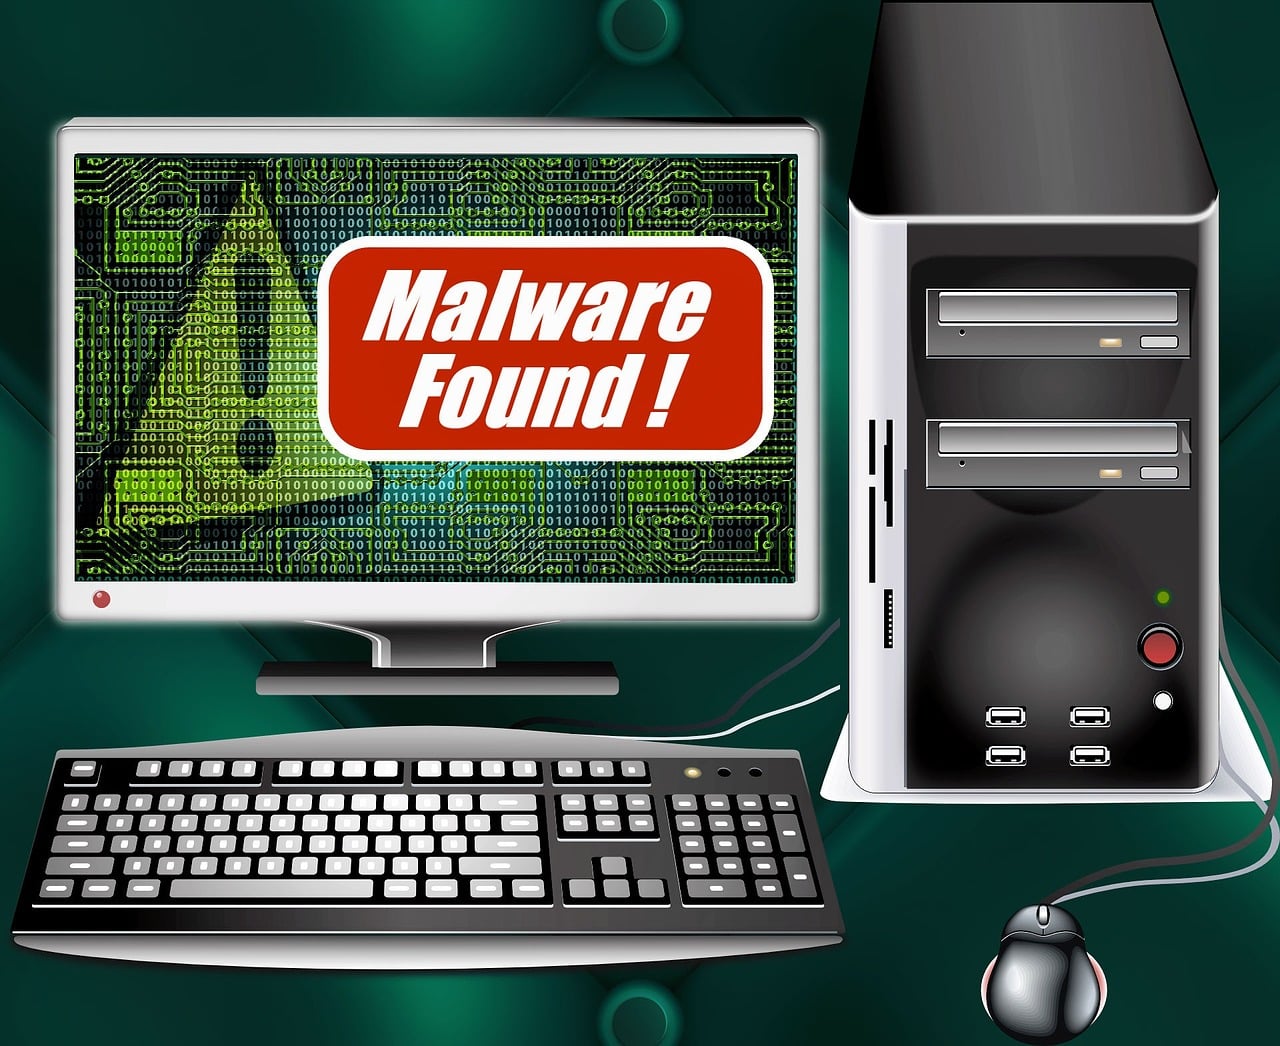 malware found on computer